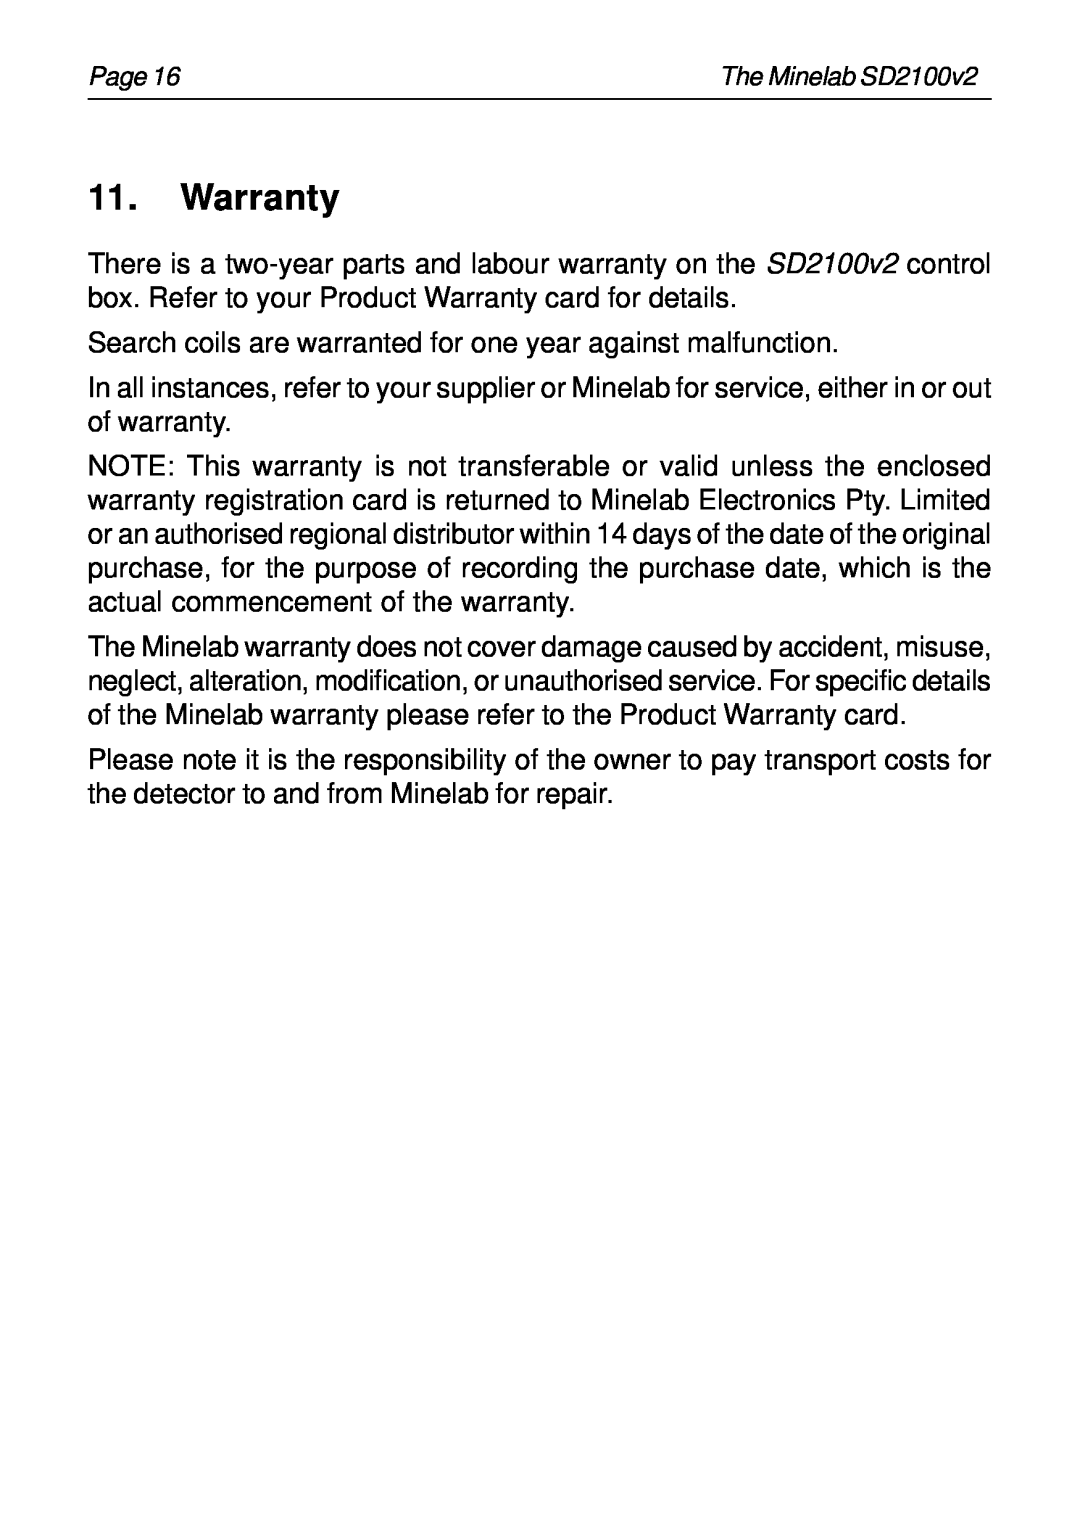 Minelab SD2100v2 instruction manual Warranty 